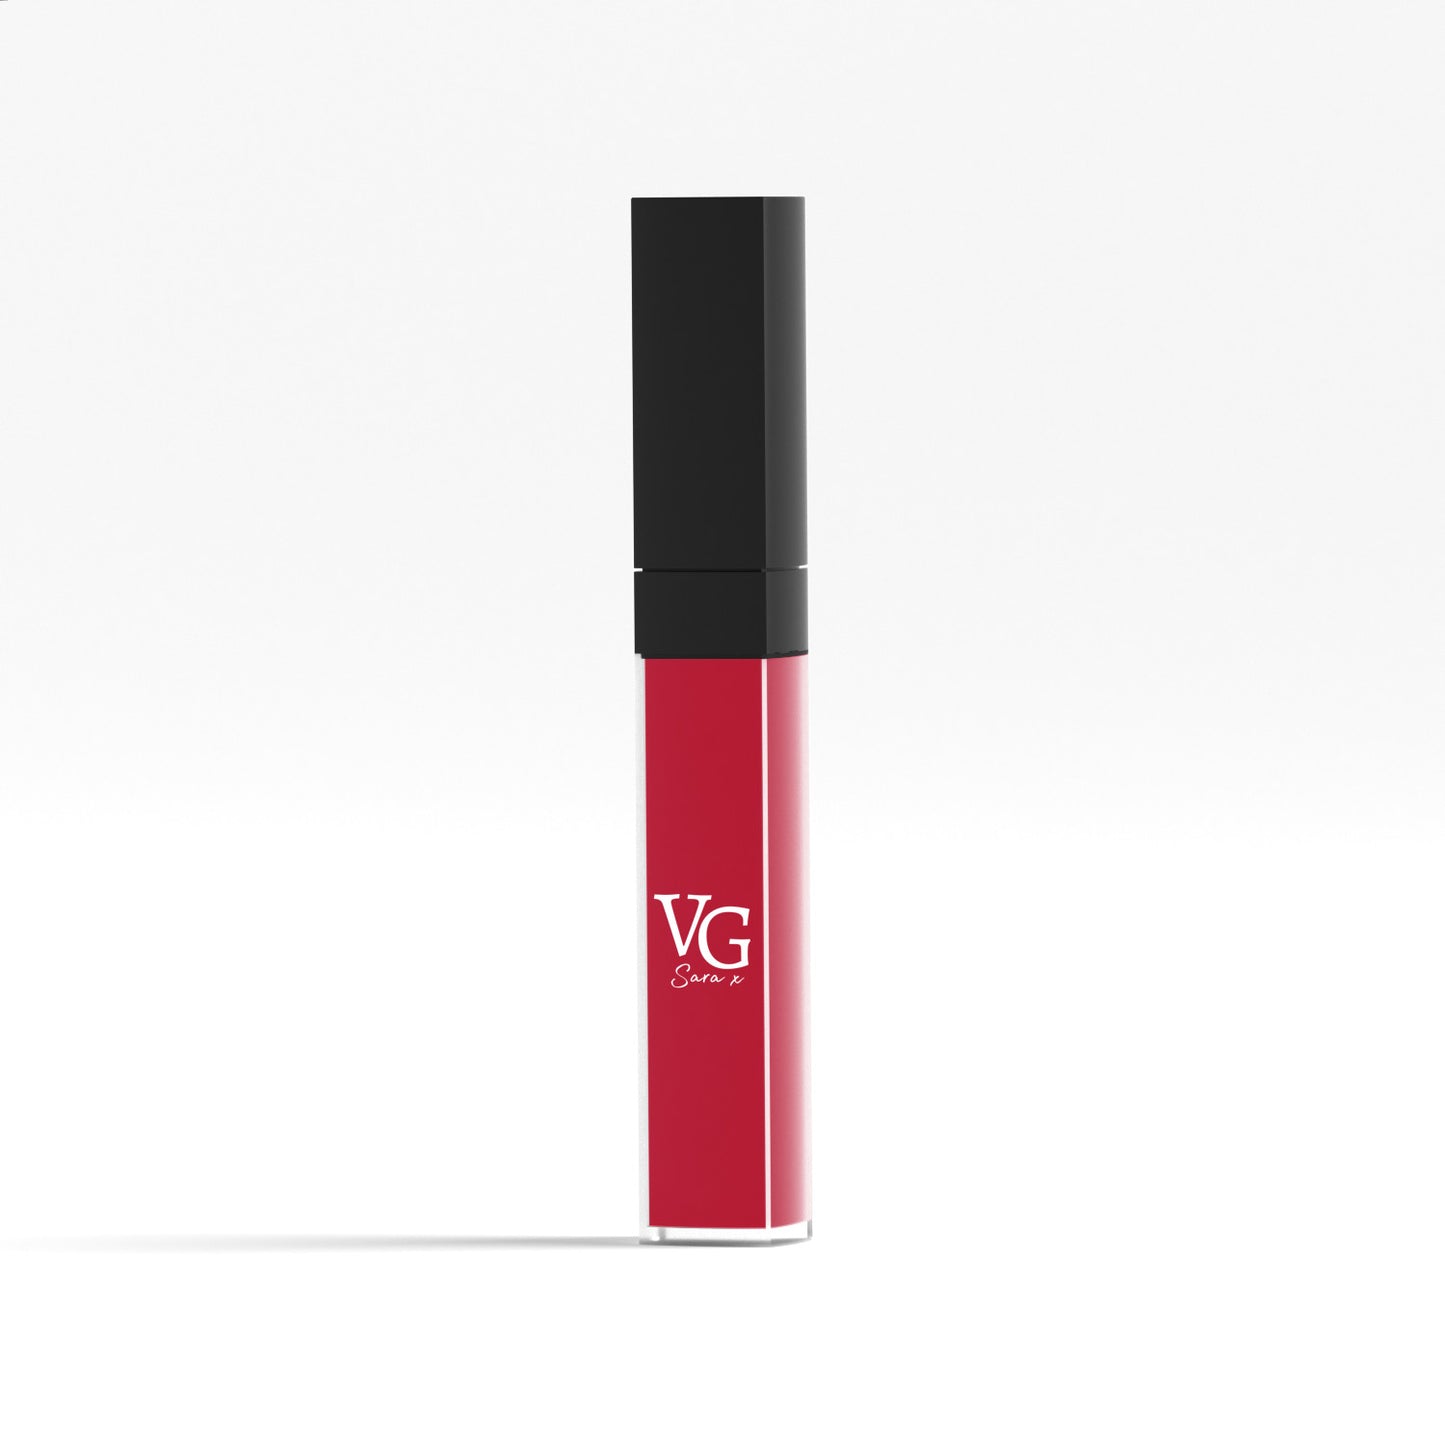 A loving red variation color shade of liquid lipstick Vg Sara x